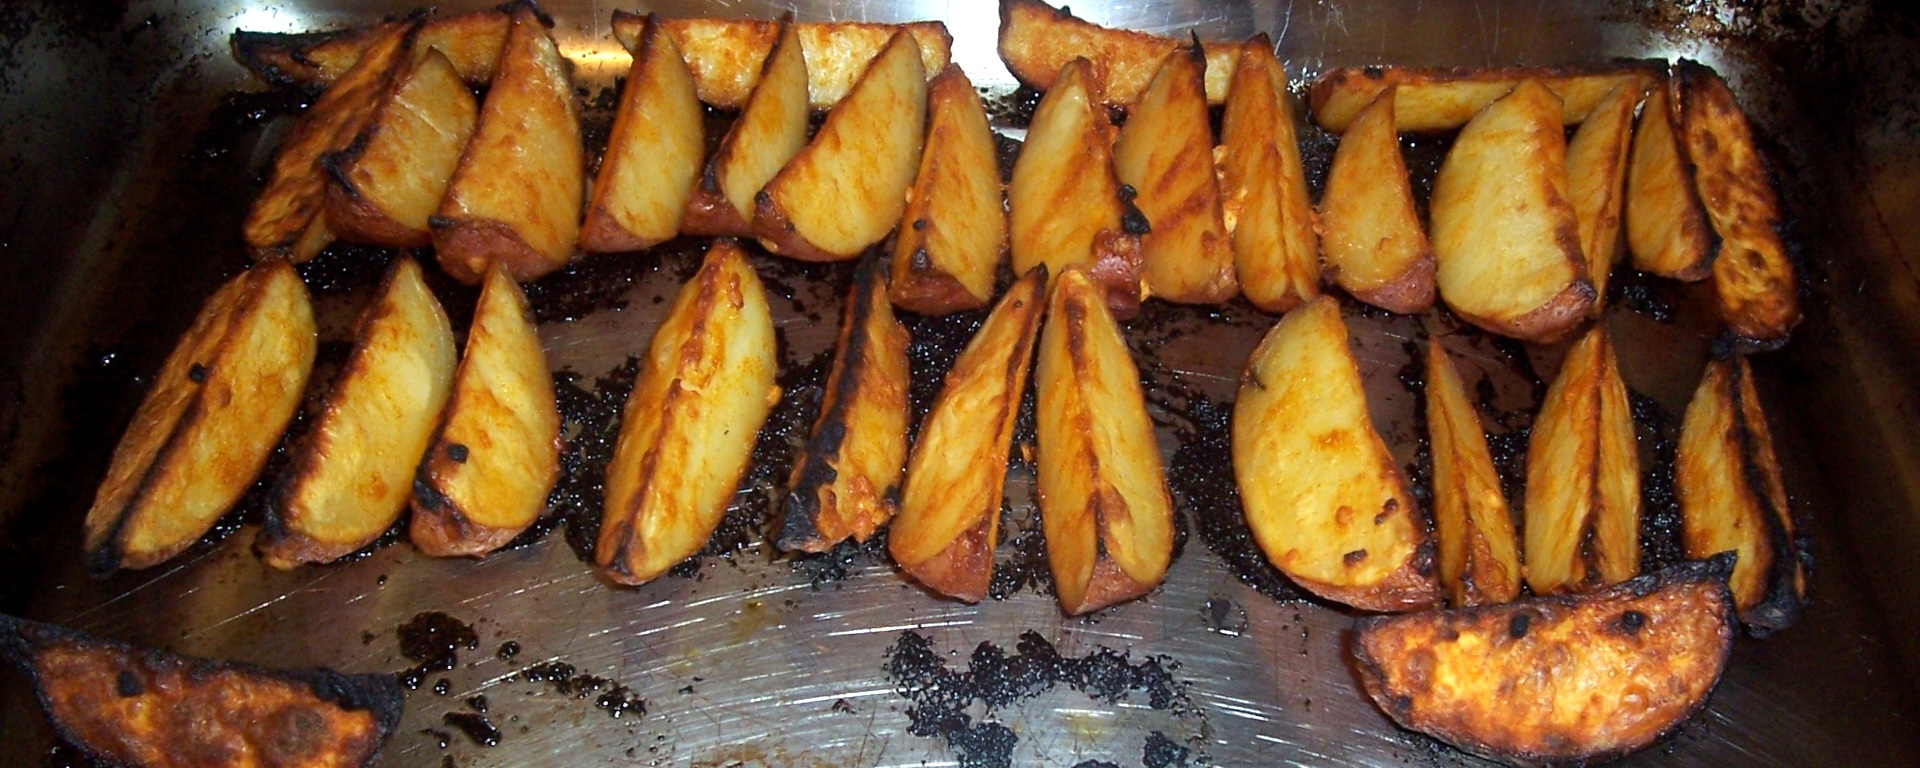 Basic Roasted Potatoes (and roasted vegetables)